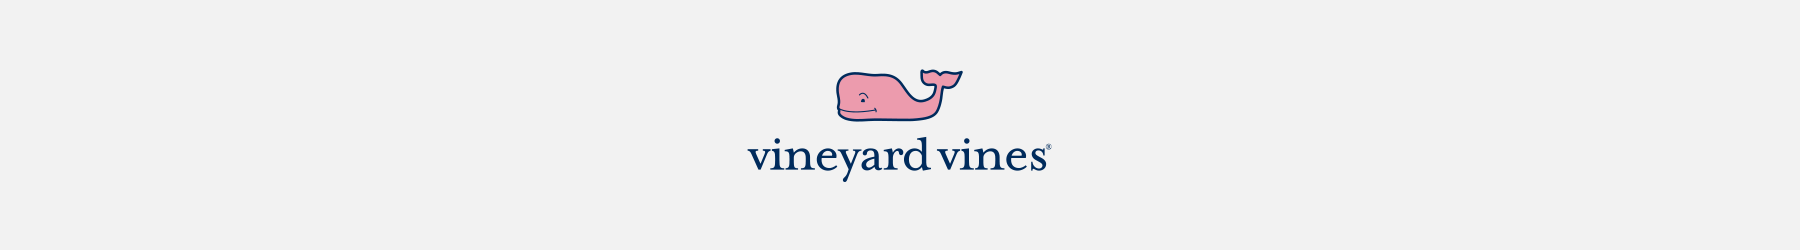 Vineyard Vines Banner